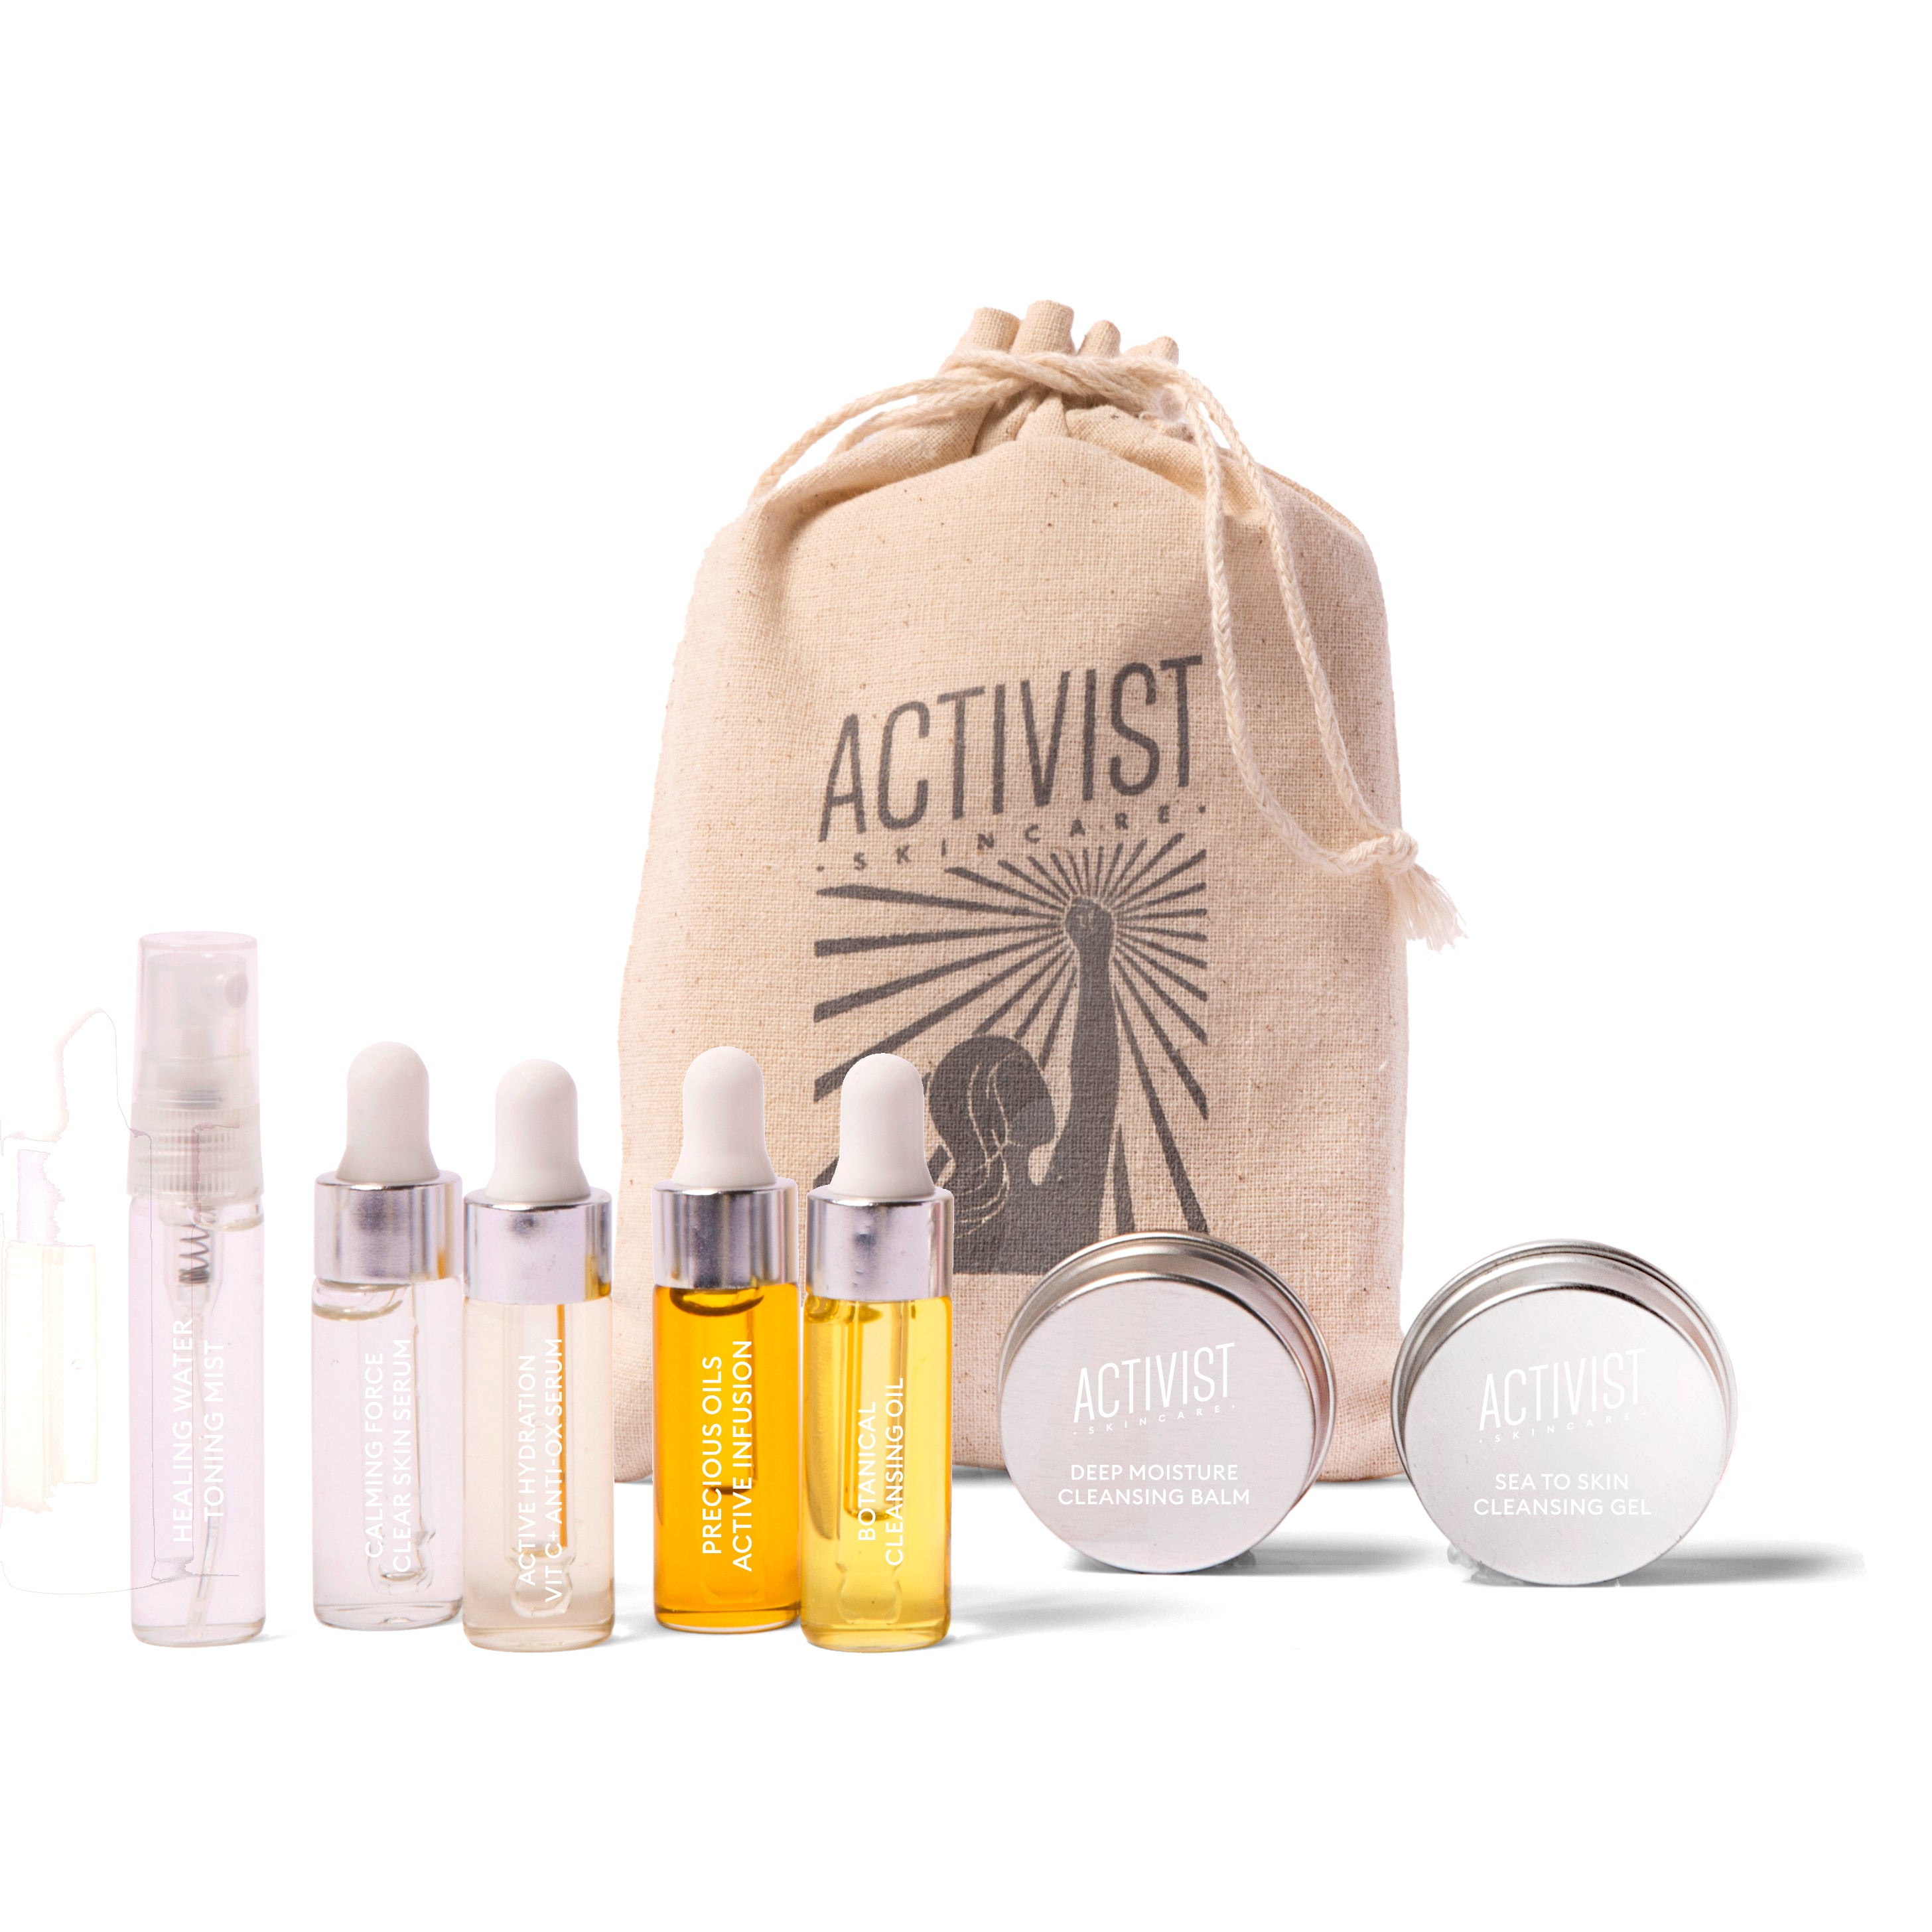 Activist Trial Kit